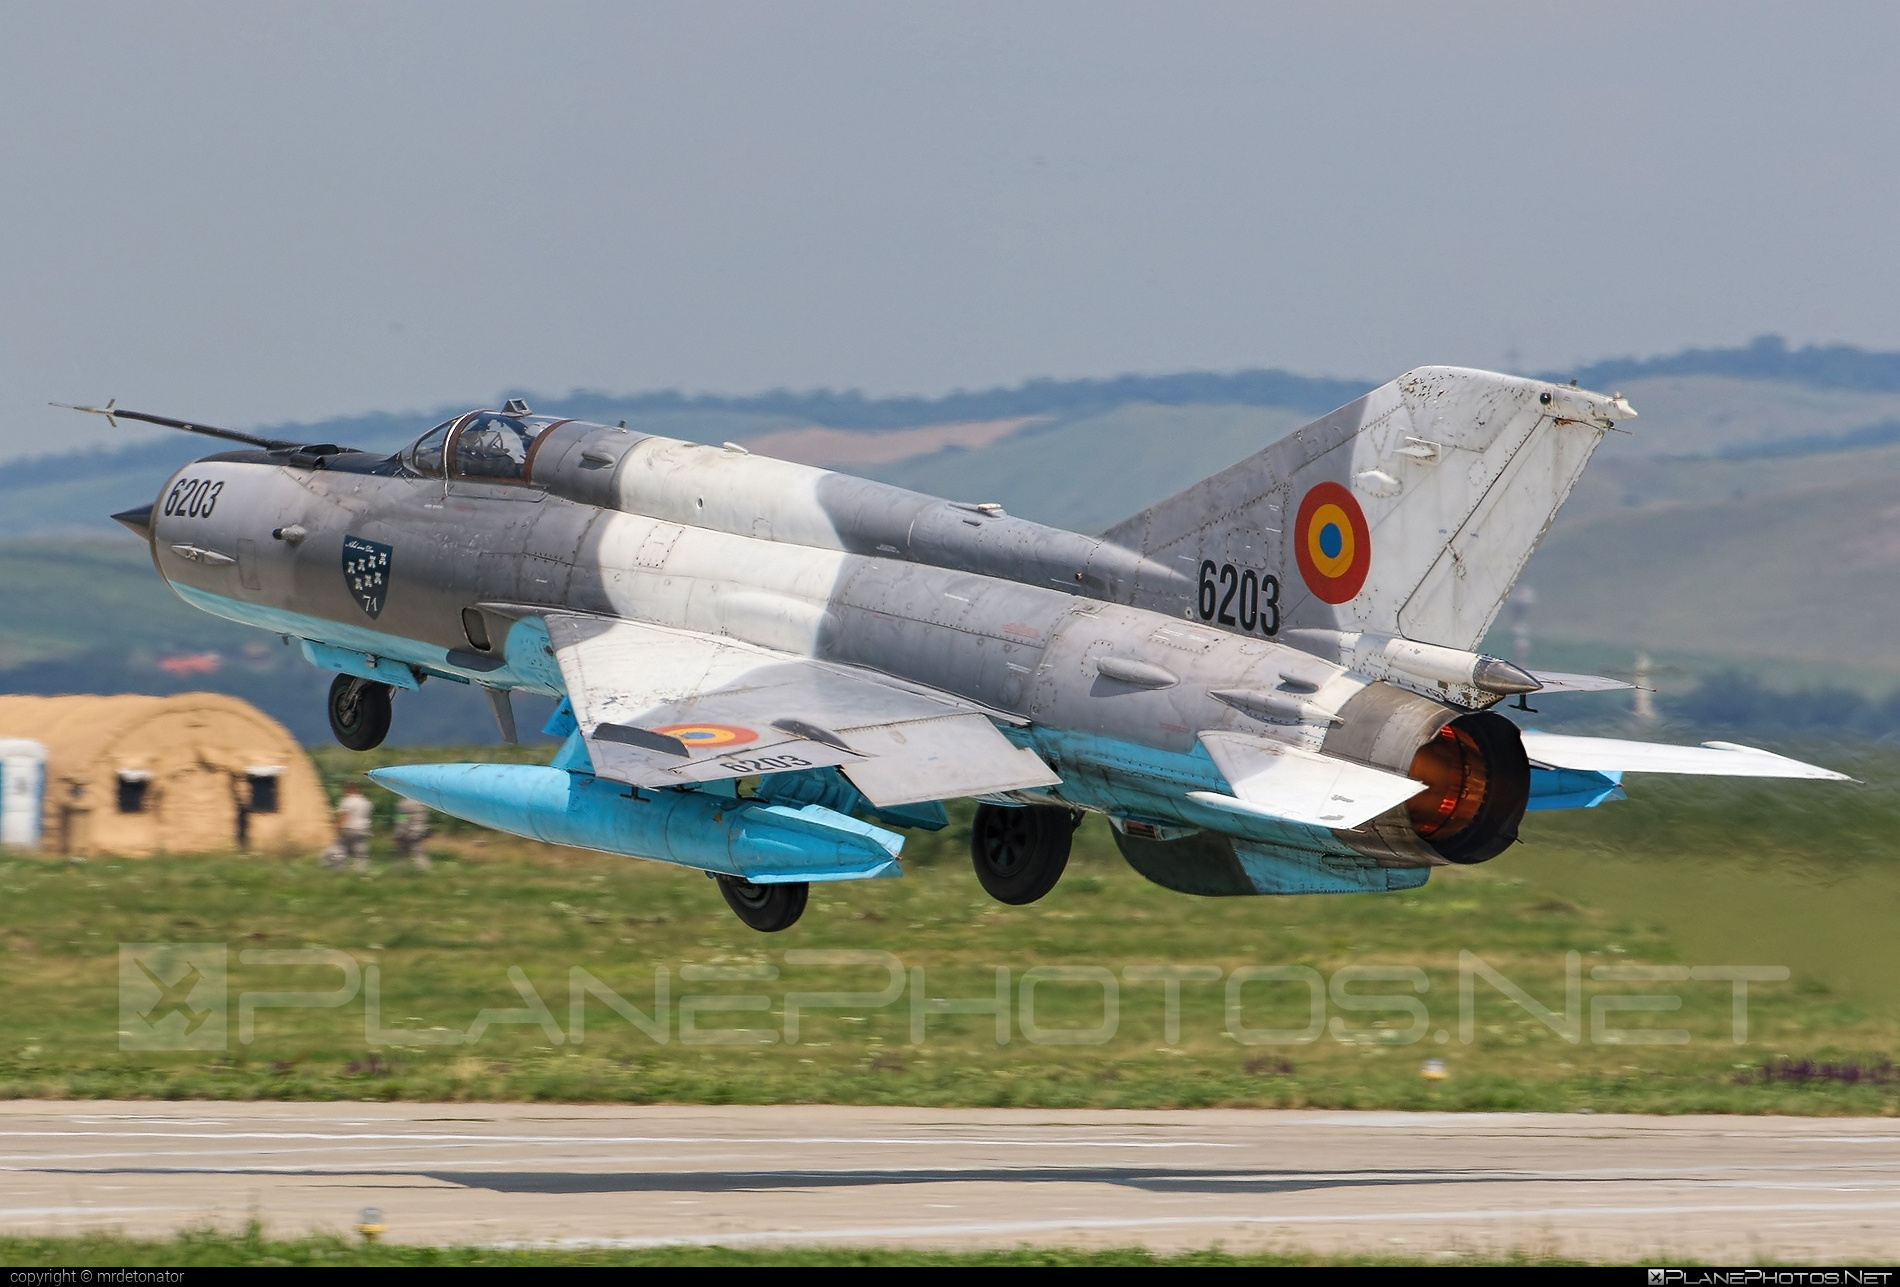 Mikoyan-Gurevich MiG-21MF - 6203 operated by Forţele Aeriene Române (Romanian Air Force) #forteleaerieneromane #mig #mig21 #mig21mf #mikoyangurevich #romanianairforce